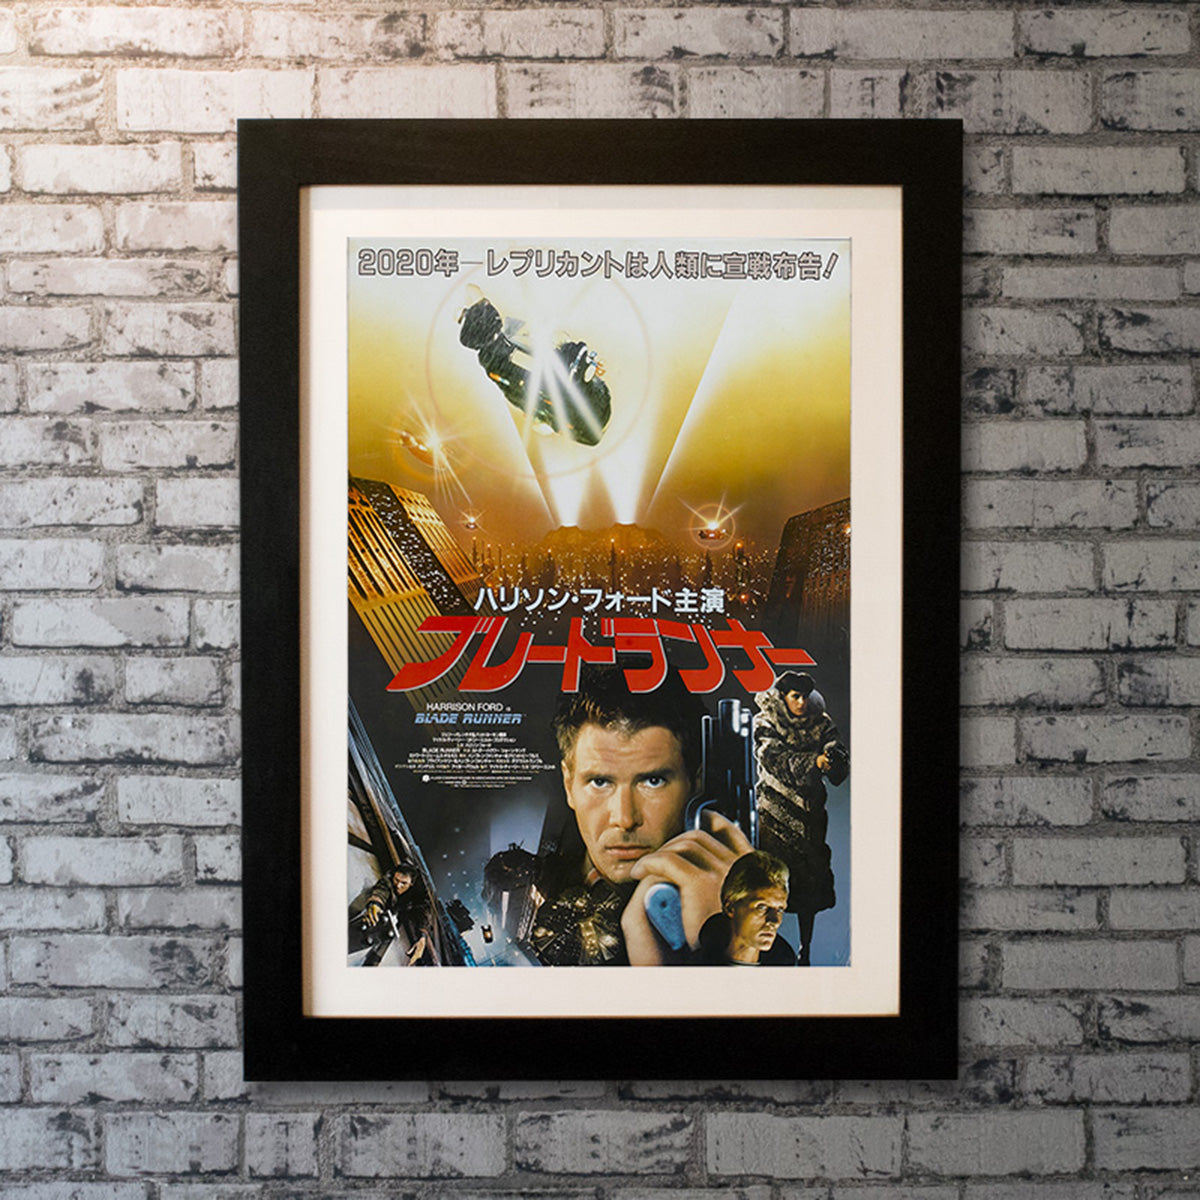 Original Movie Poster of Blade Runner (1982)